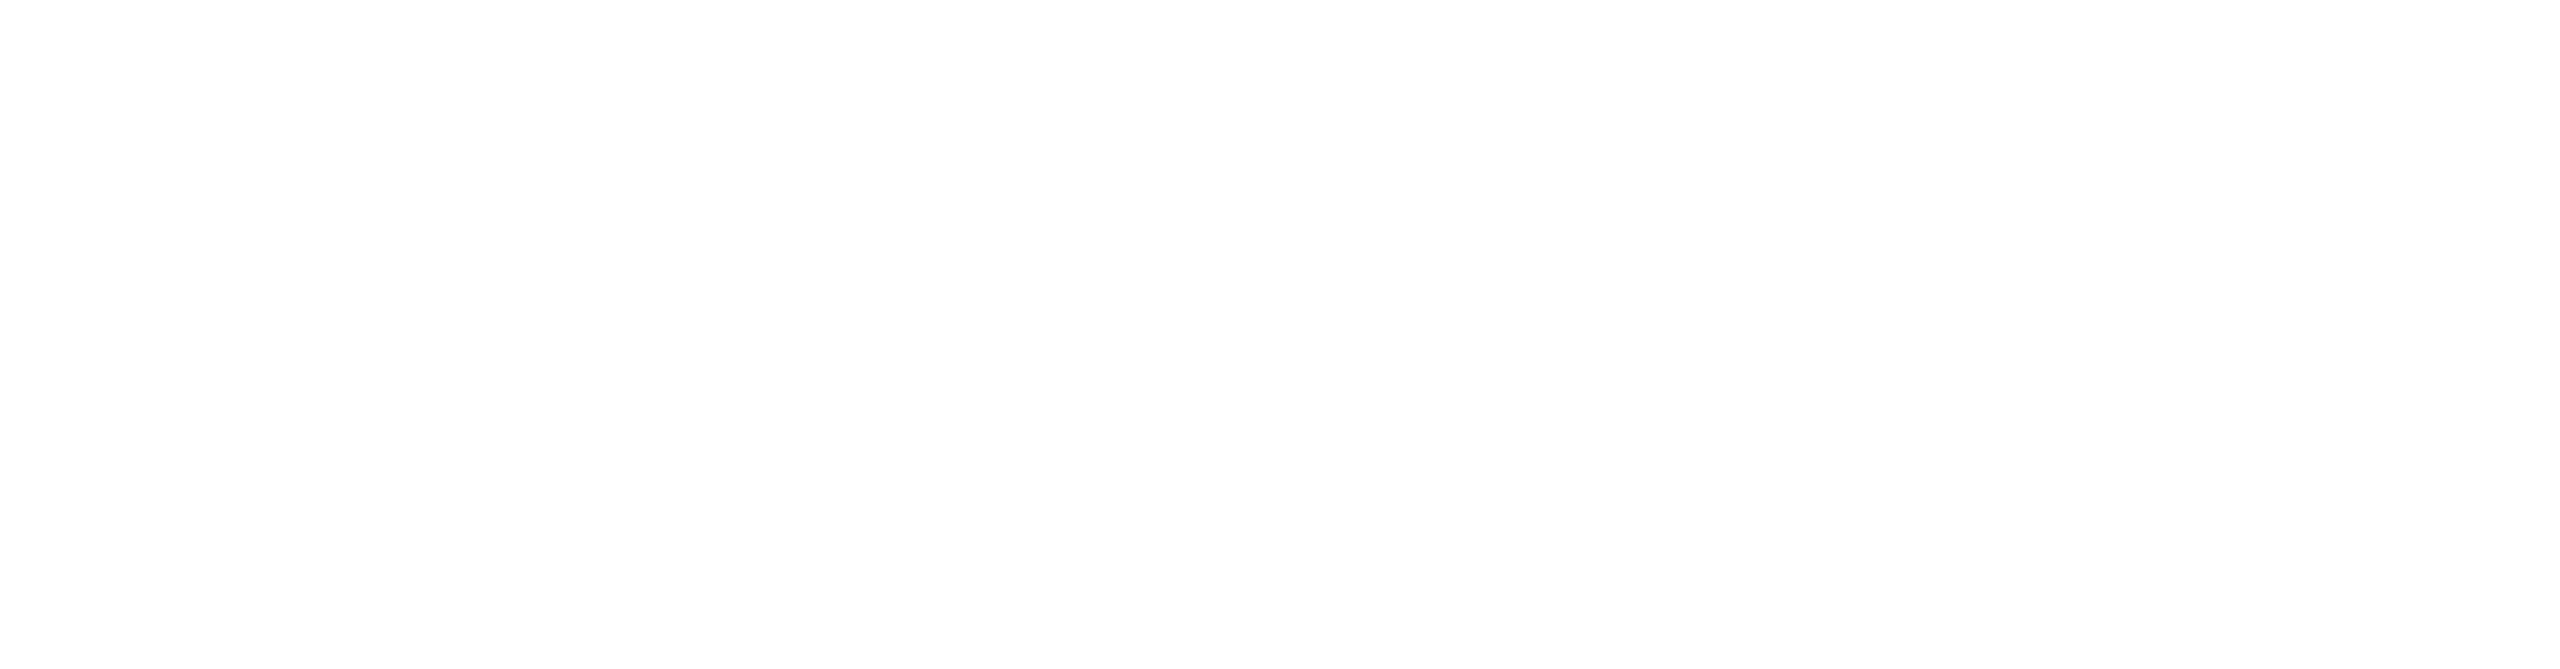 Lbrands logo